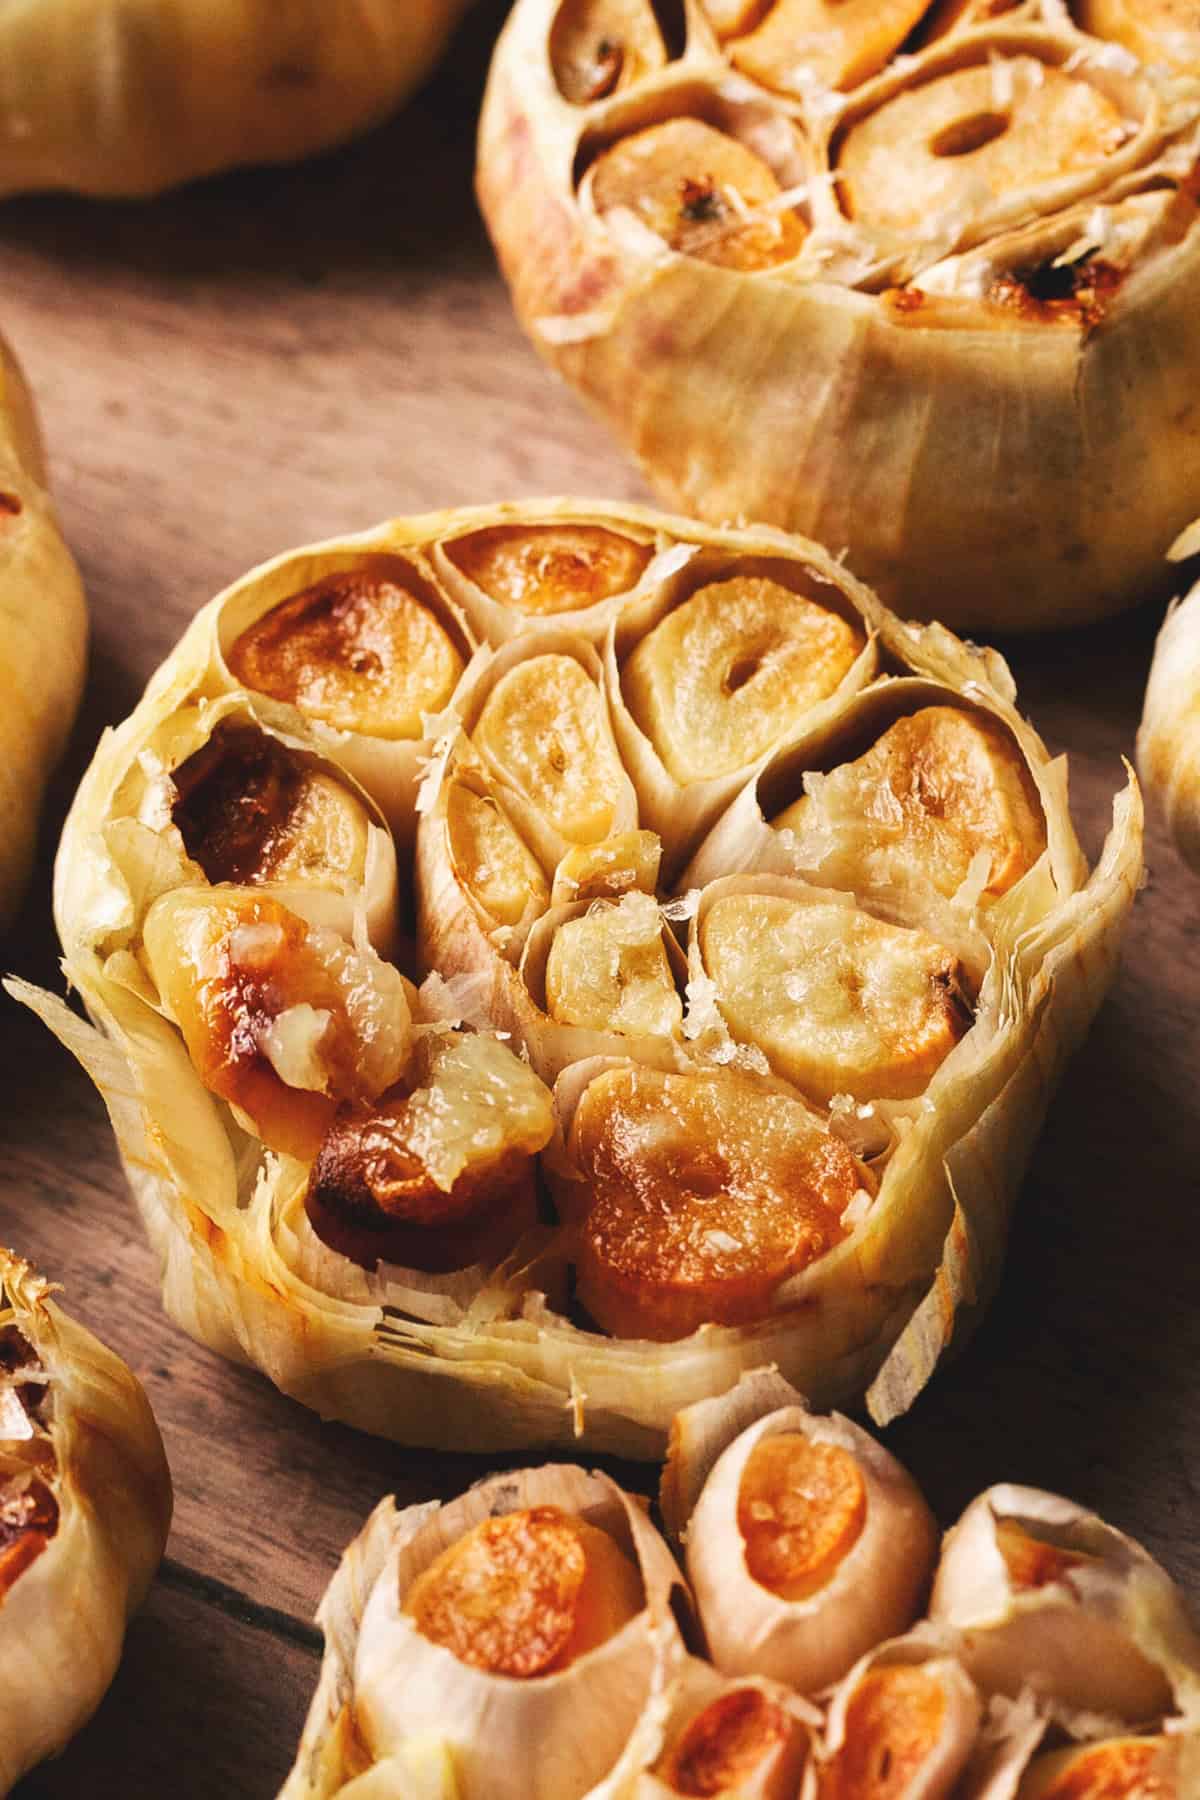 up close view of roasted garlic inside husk